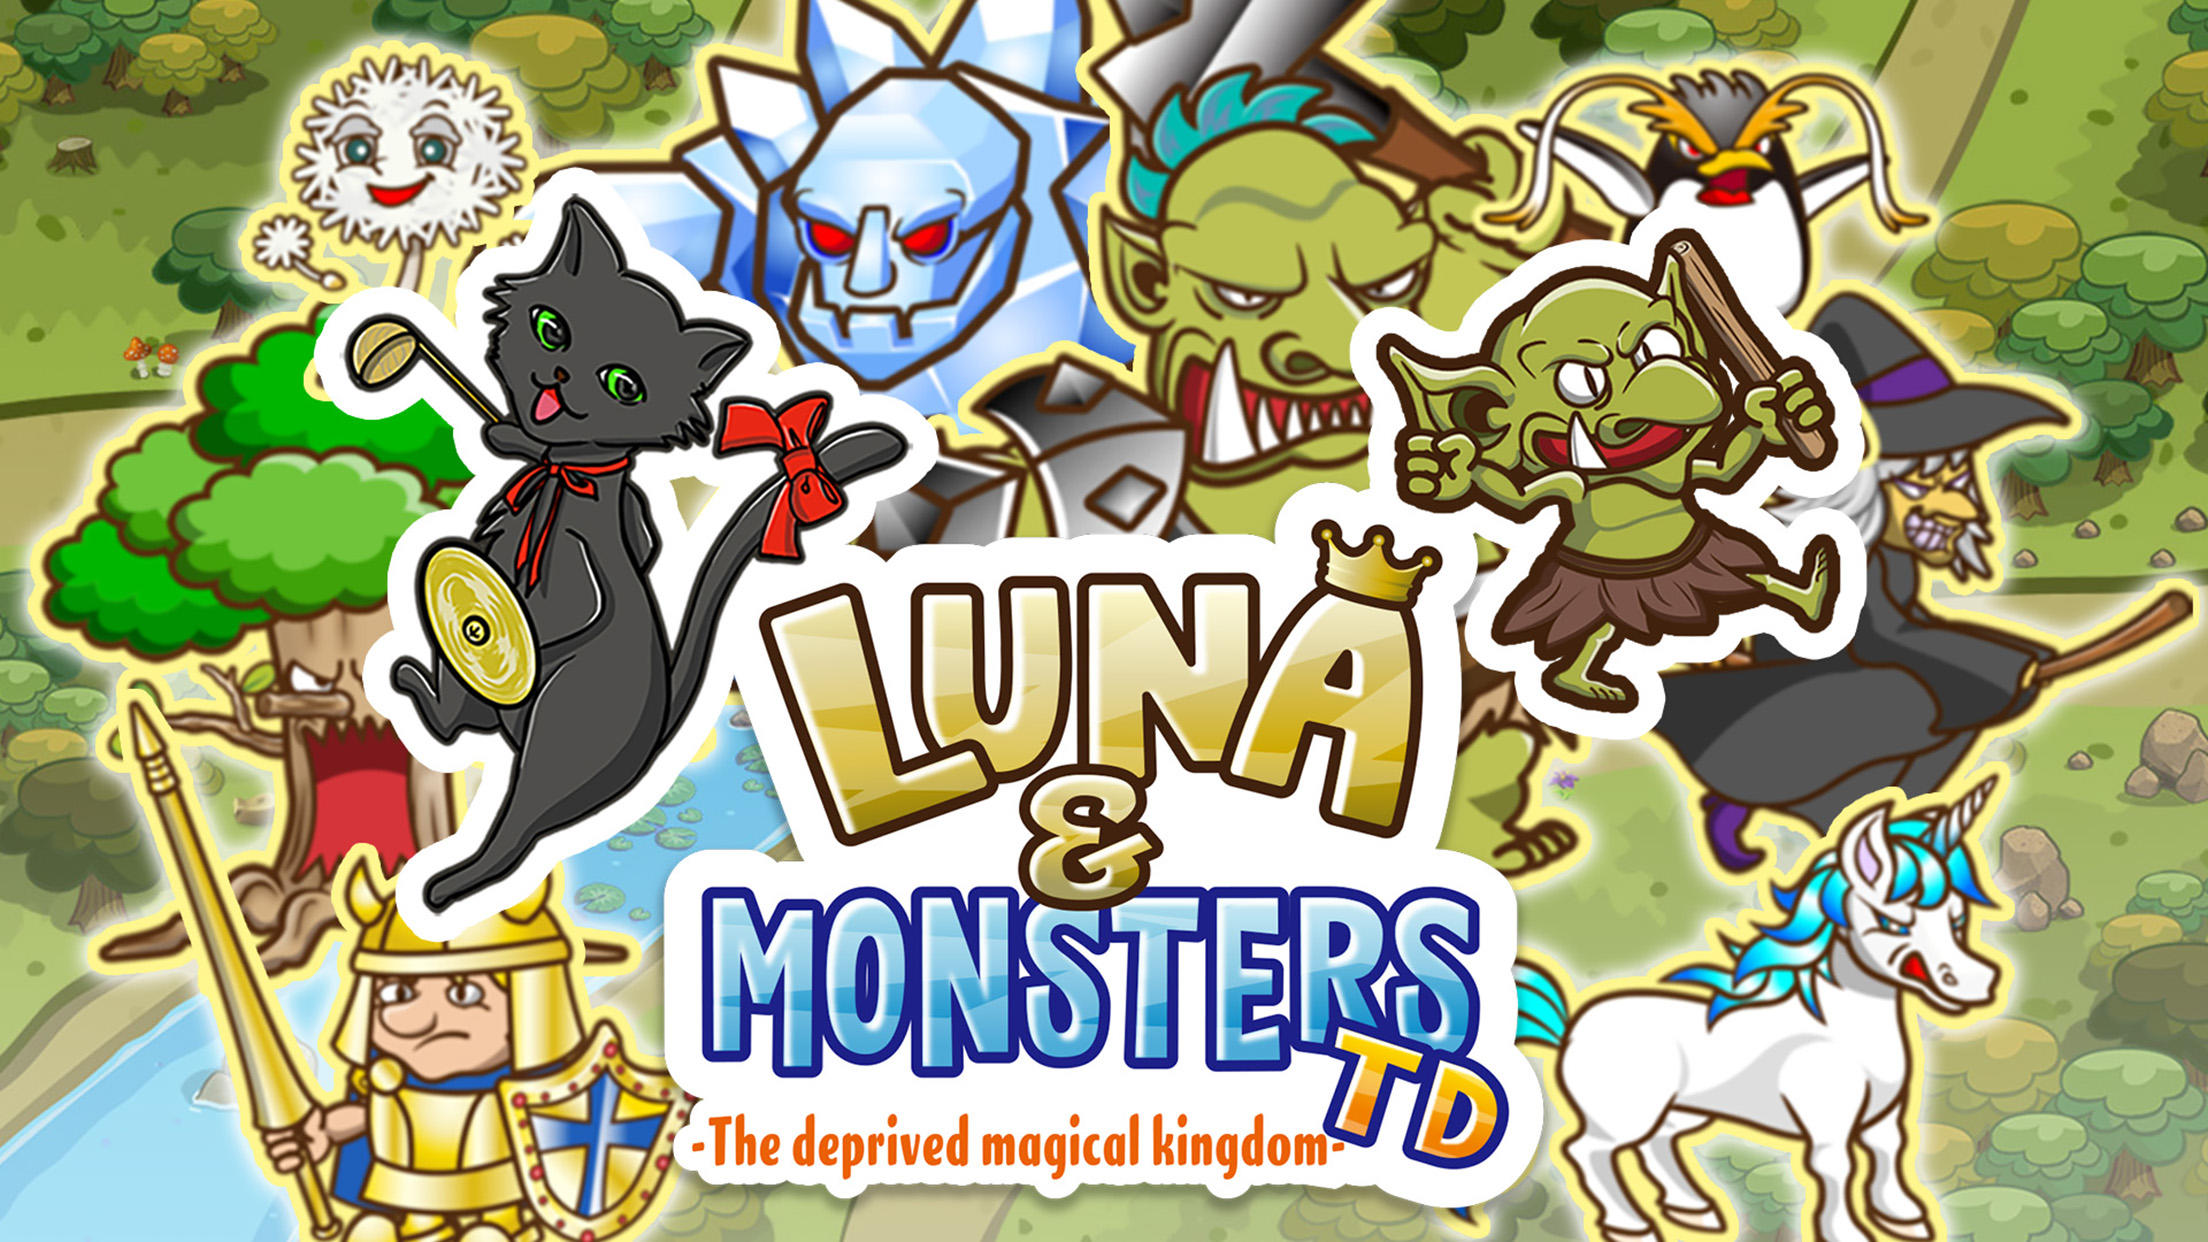 Screenshot 1 of Luna & Monsters Tower Defense 